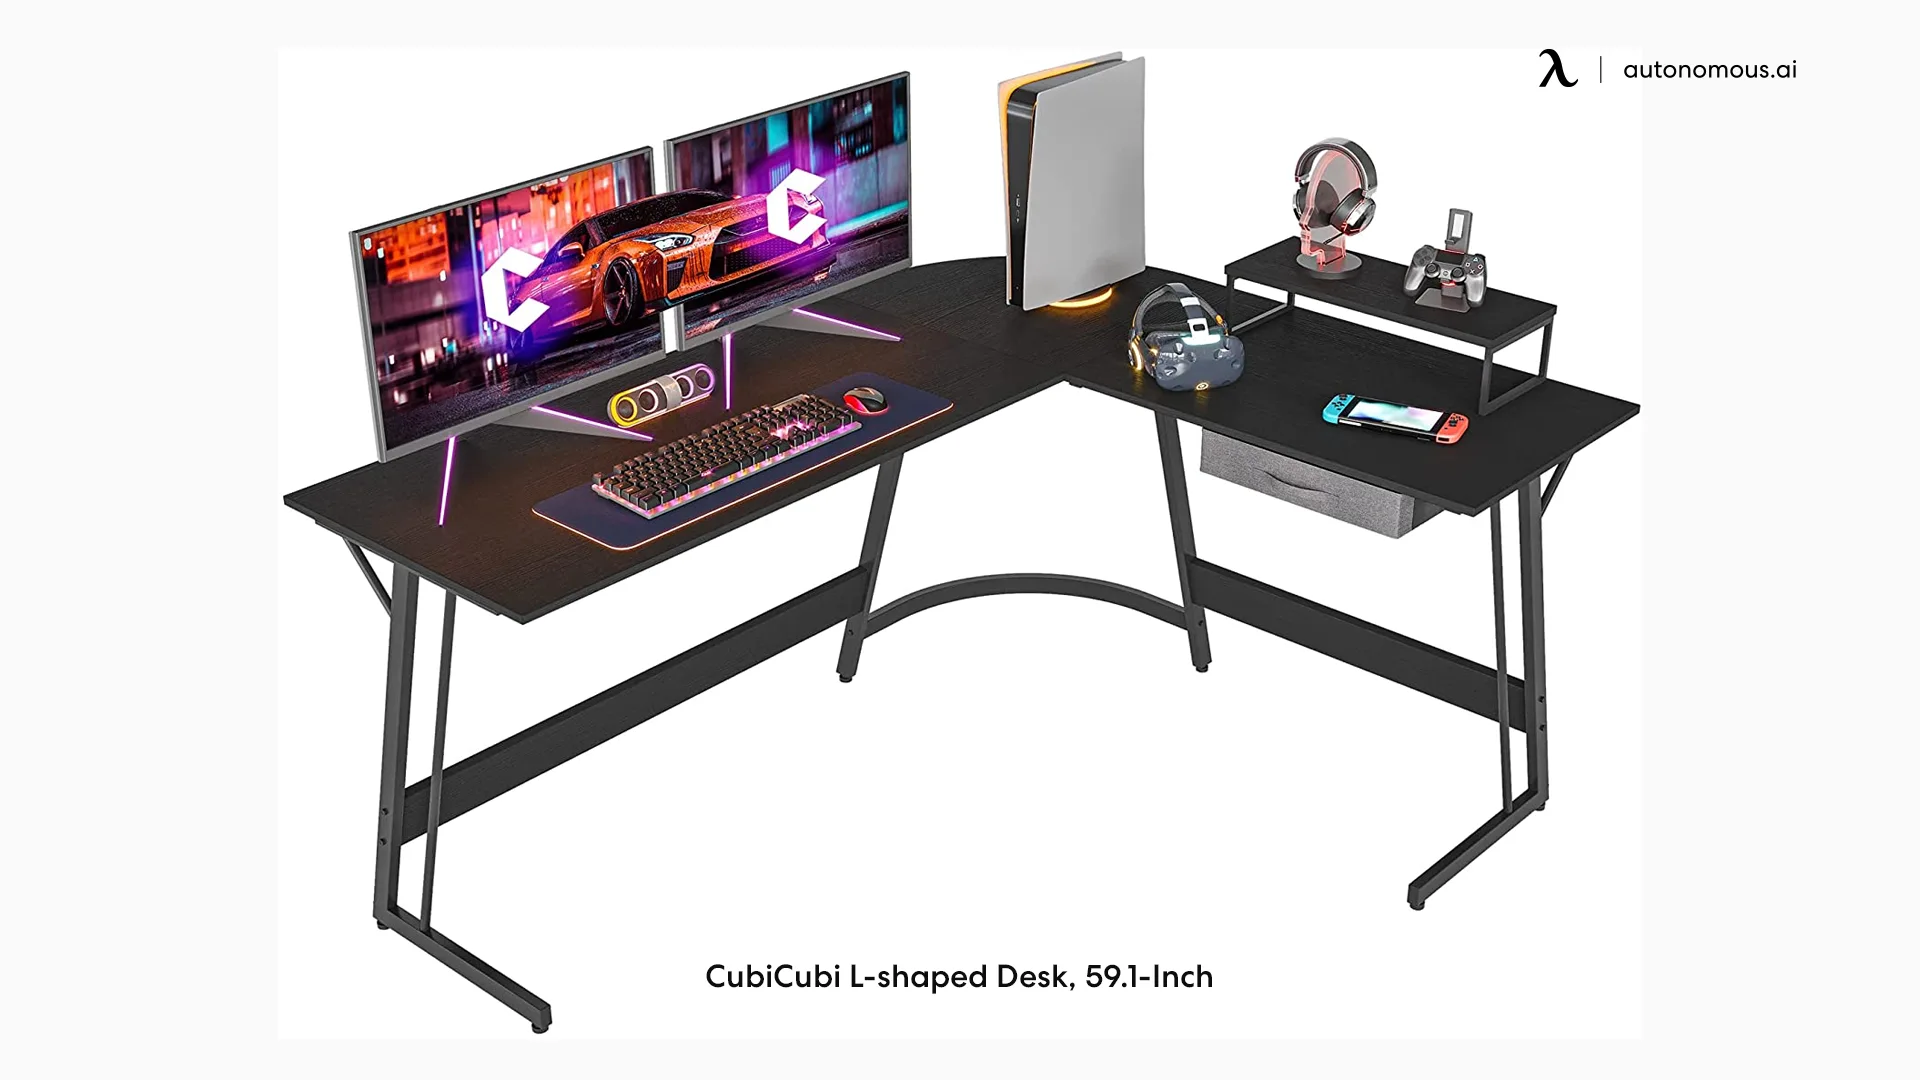 CubiCubi L-shaped Desk, 59.1-Inch small L-shaped desk